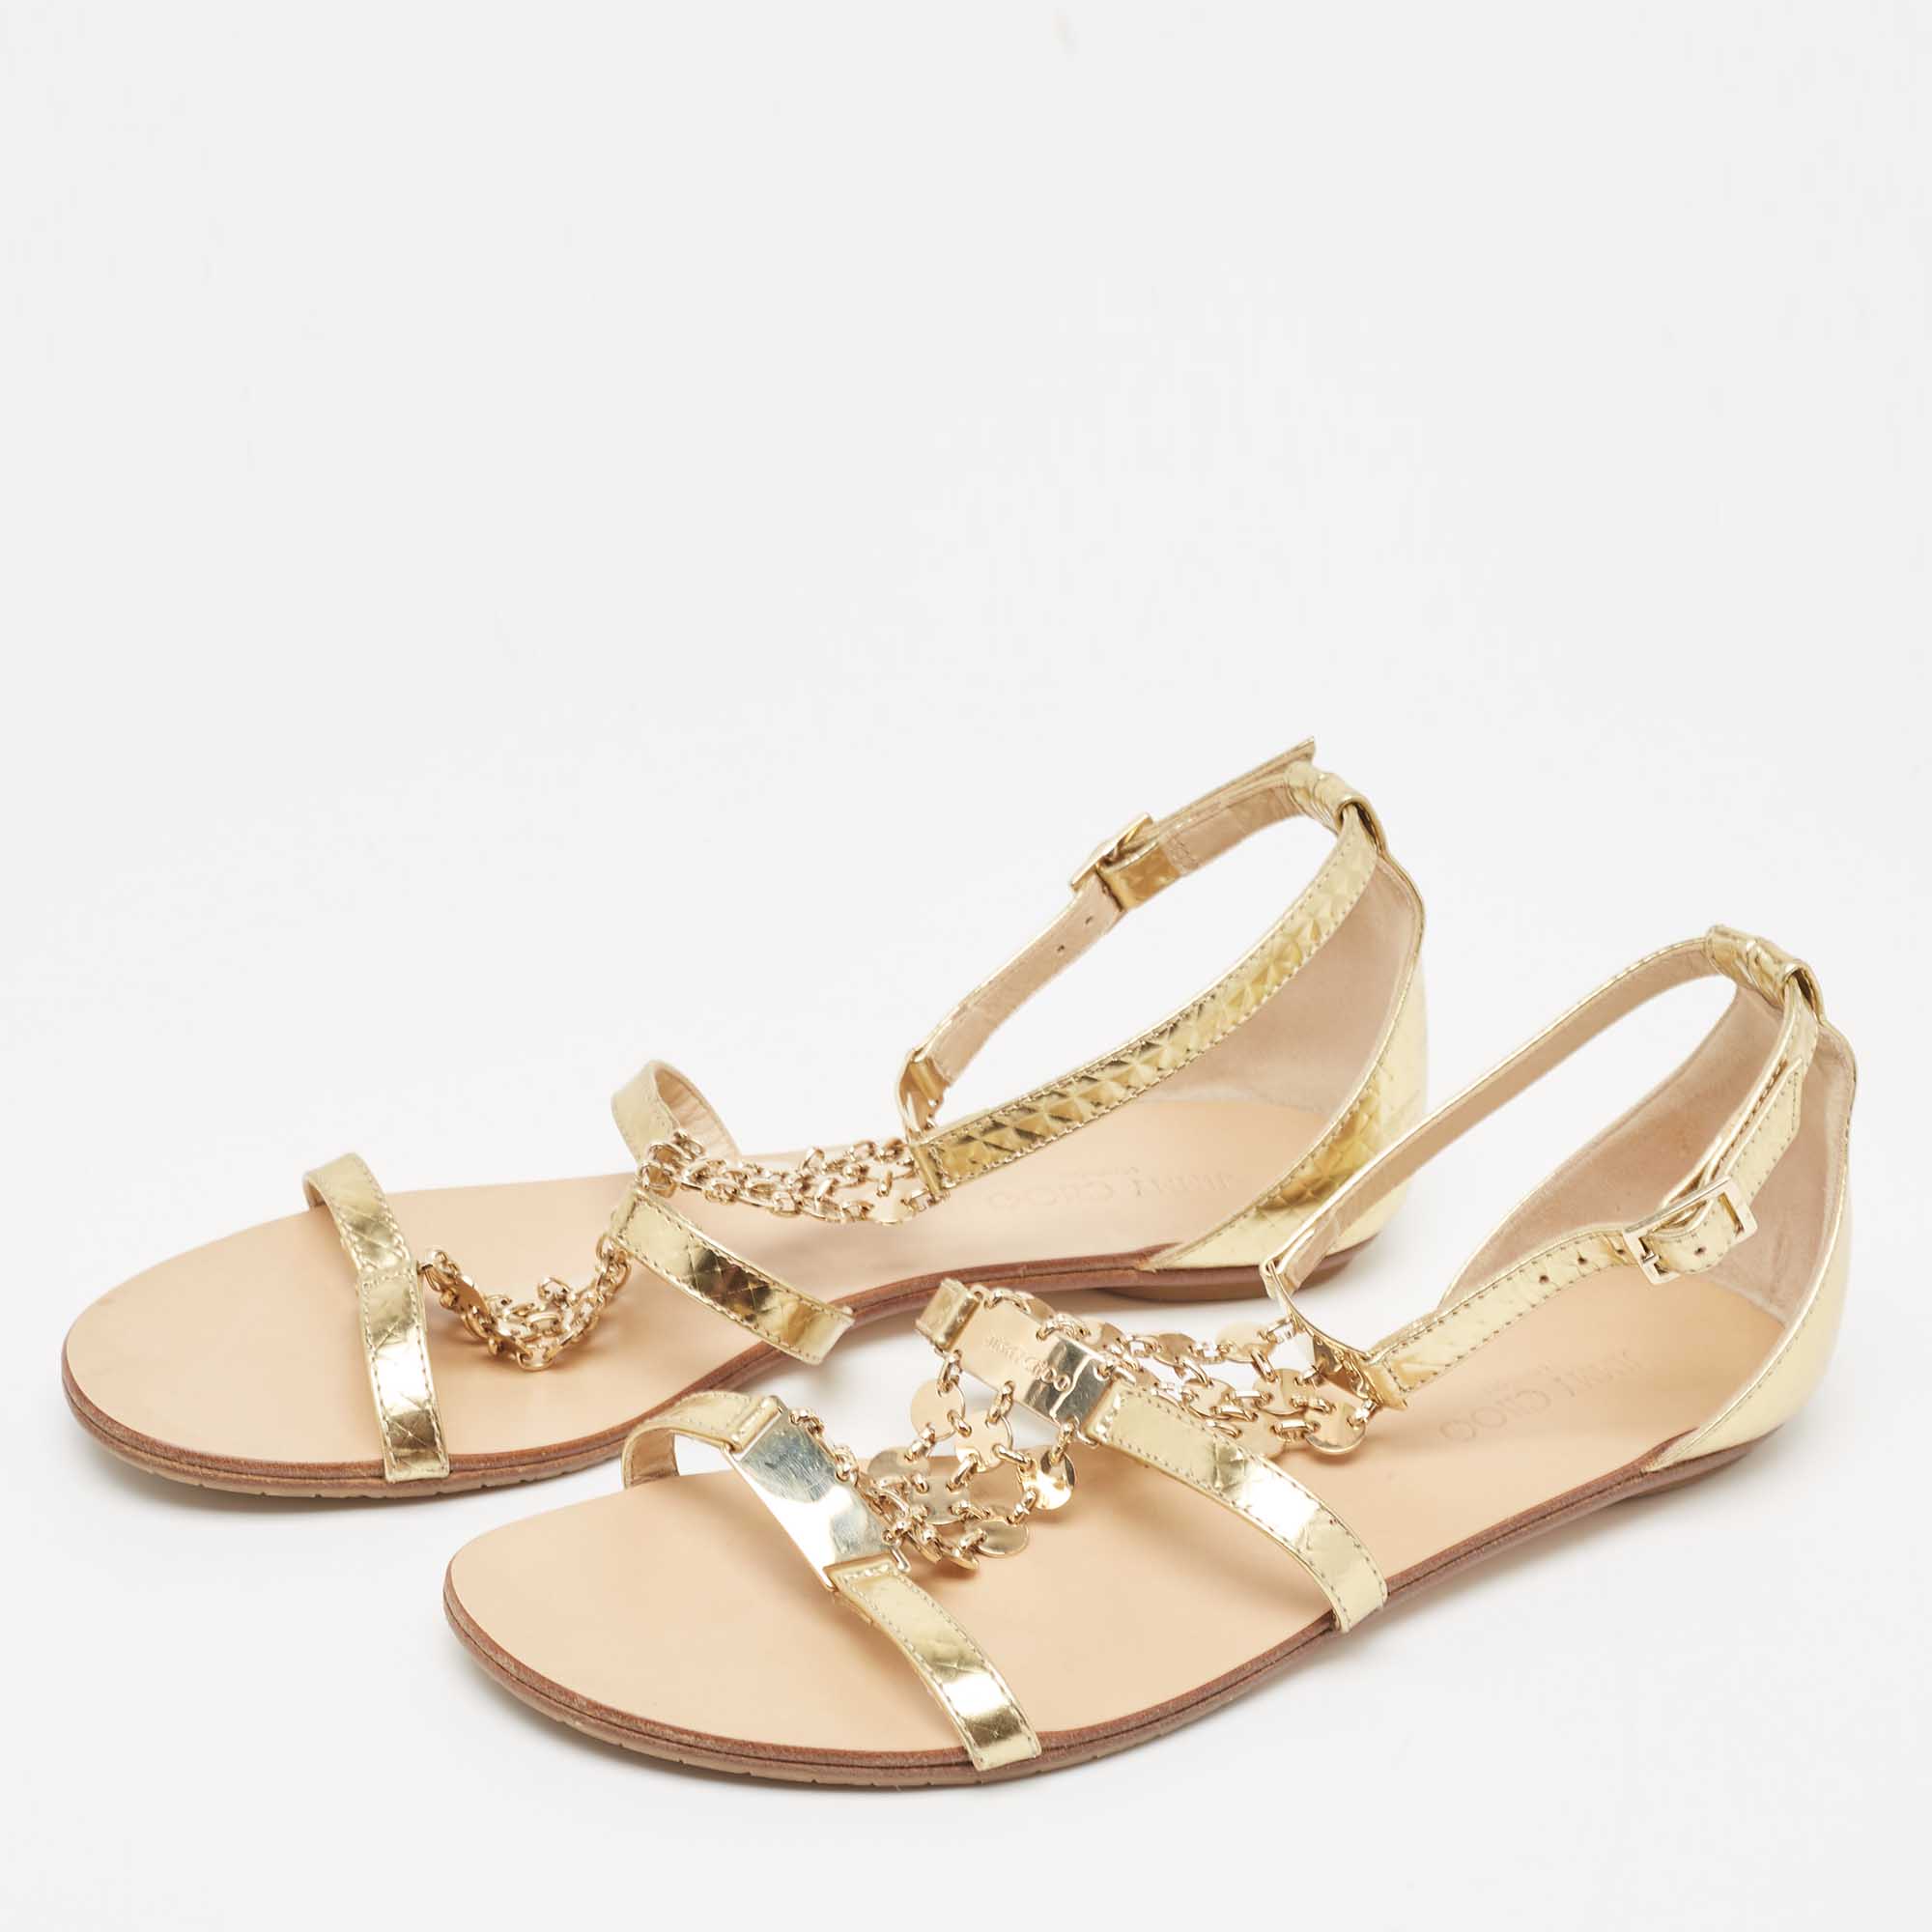 JIMMY CHOO Women's Marle Flats Latte Crystal Buckle Embellished Sandals  Size 7 | eBay